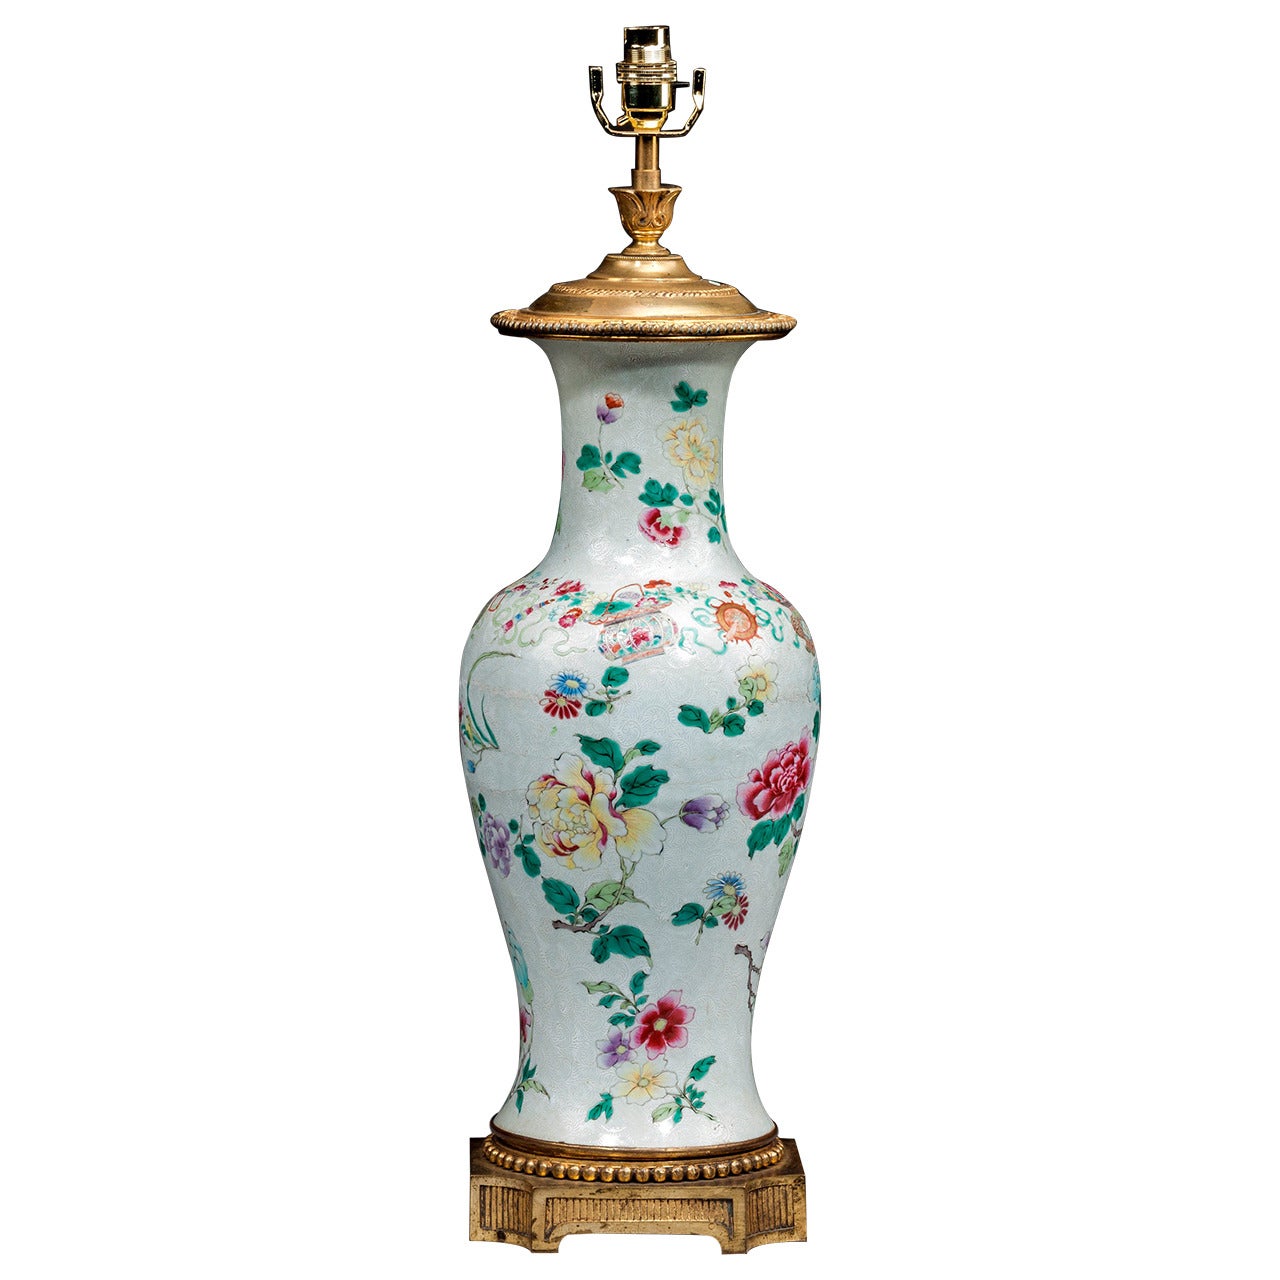 Late 19th century Canton Porcelain Sgraffito Lamp